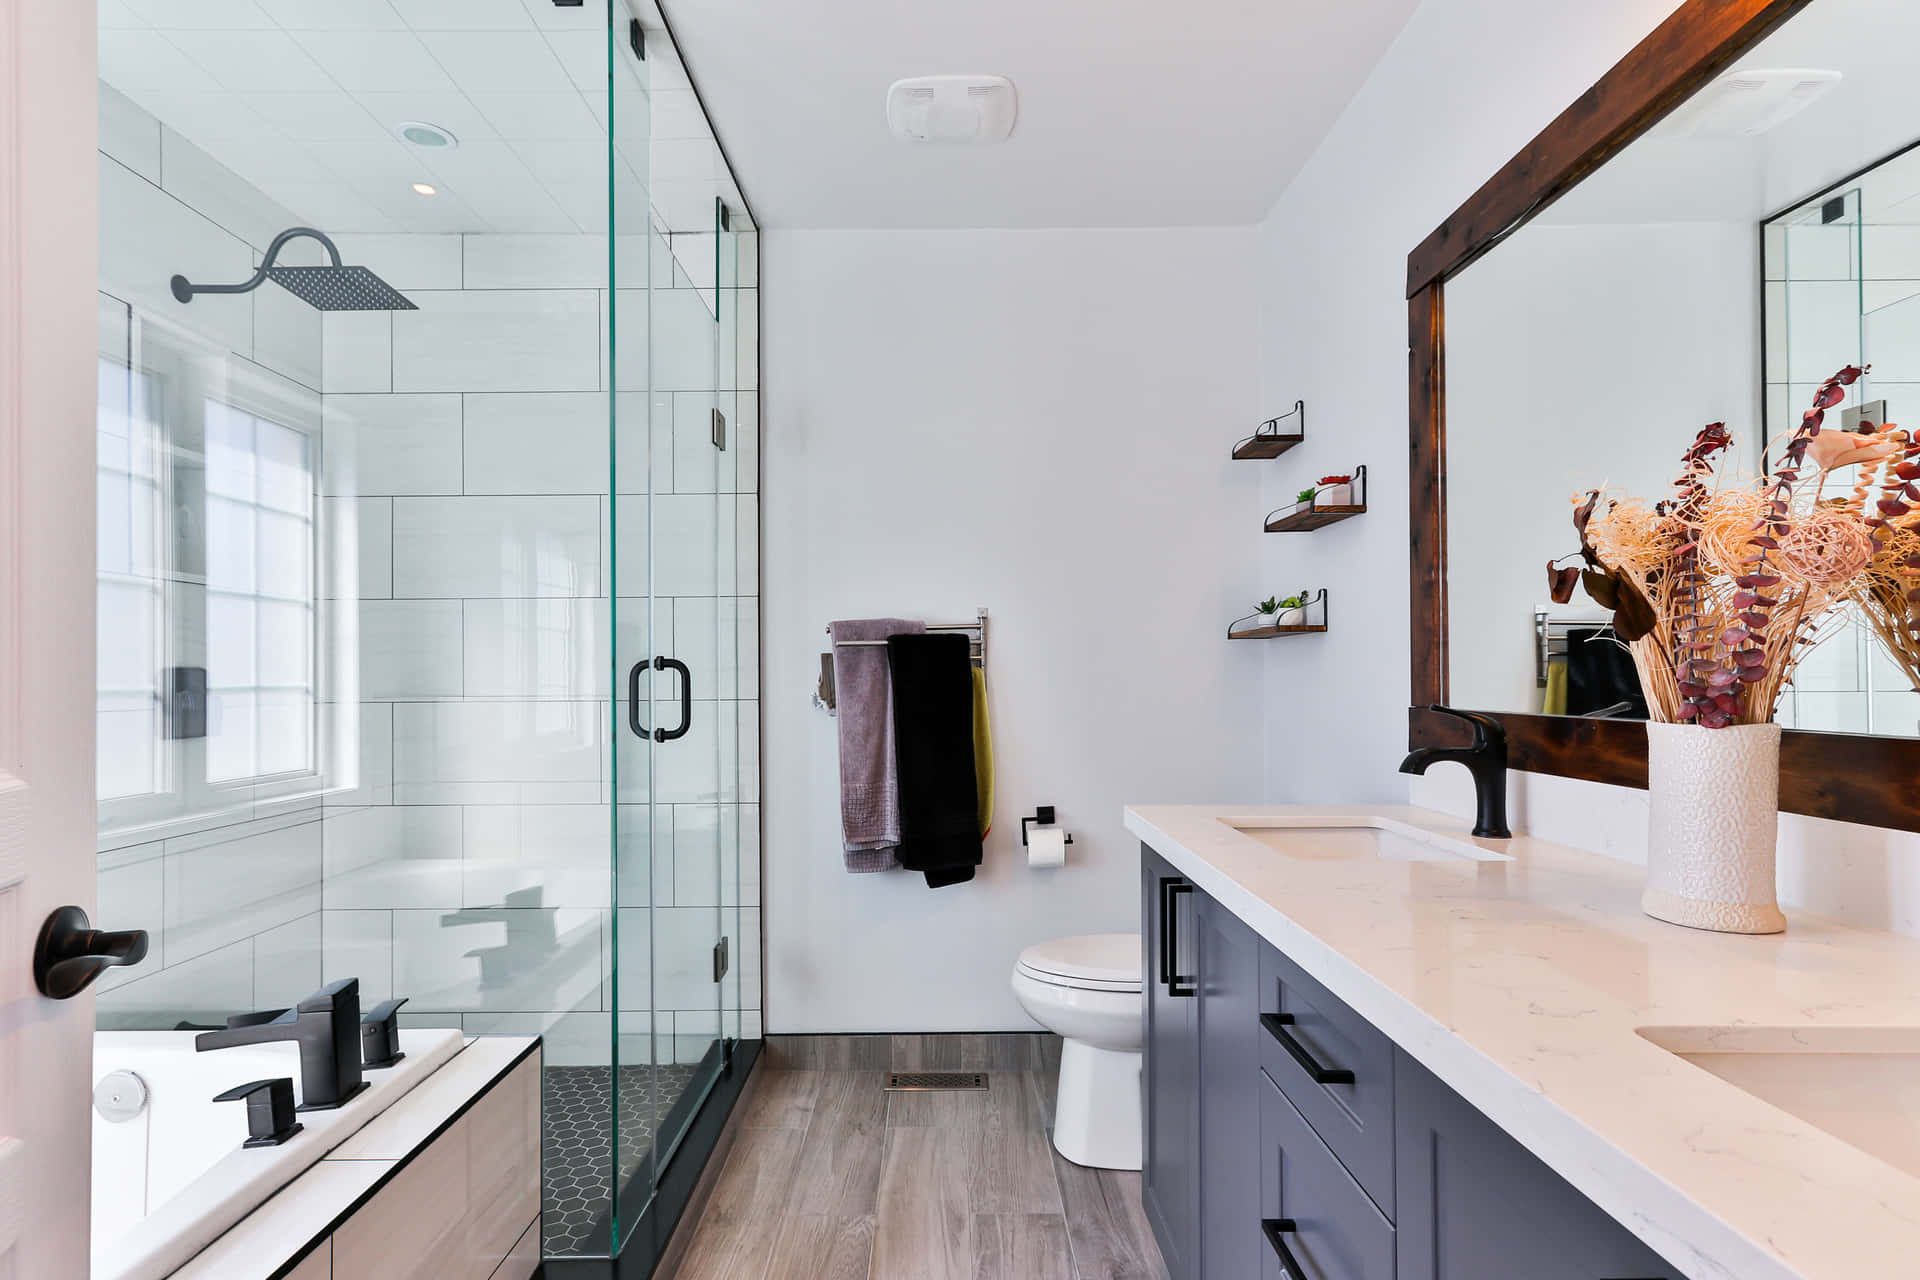 Caption: Modern Luxury Bathroom with Elegant Details